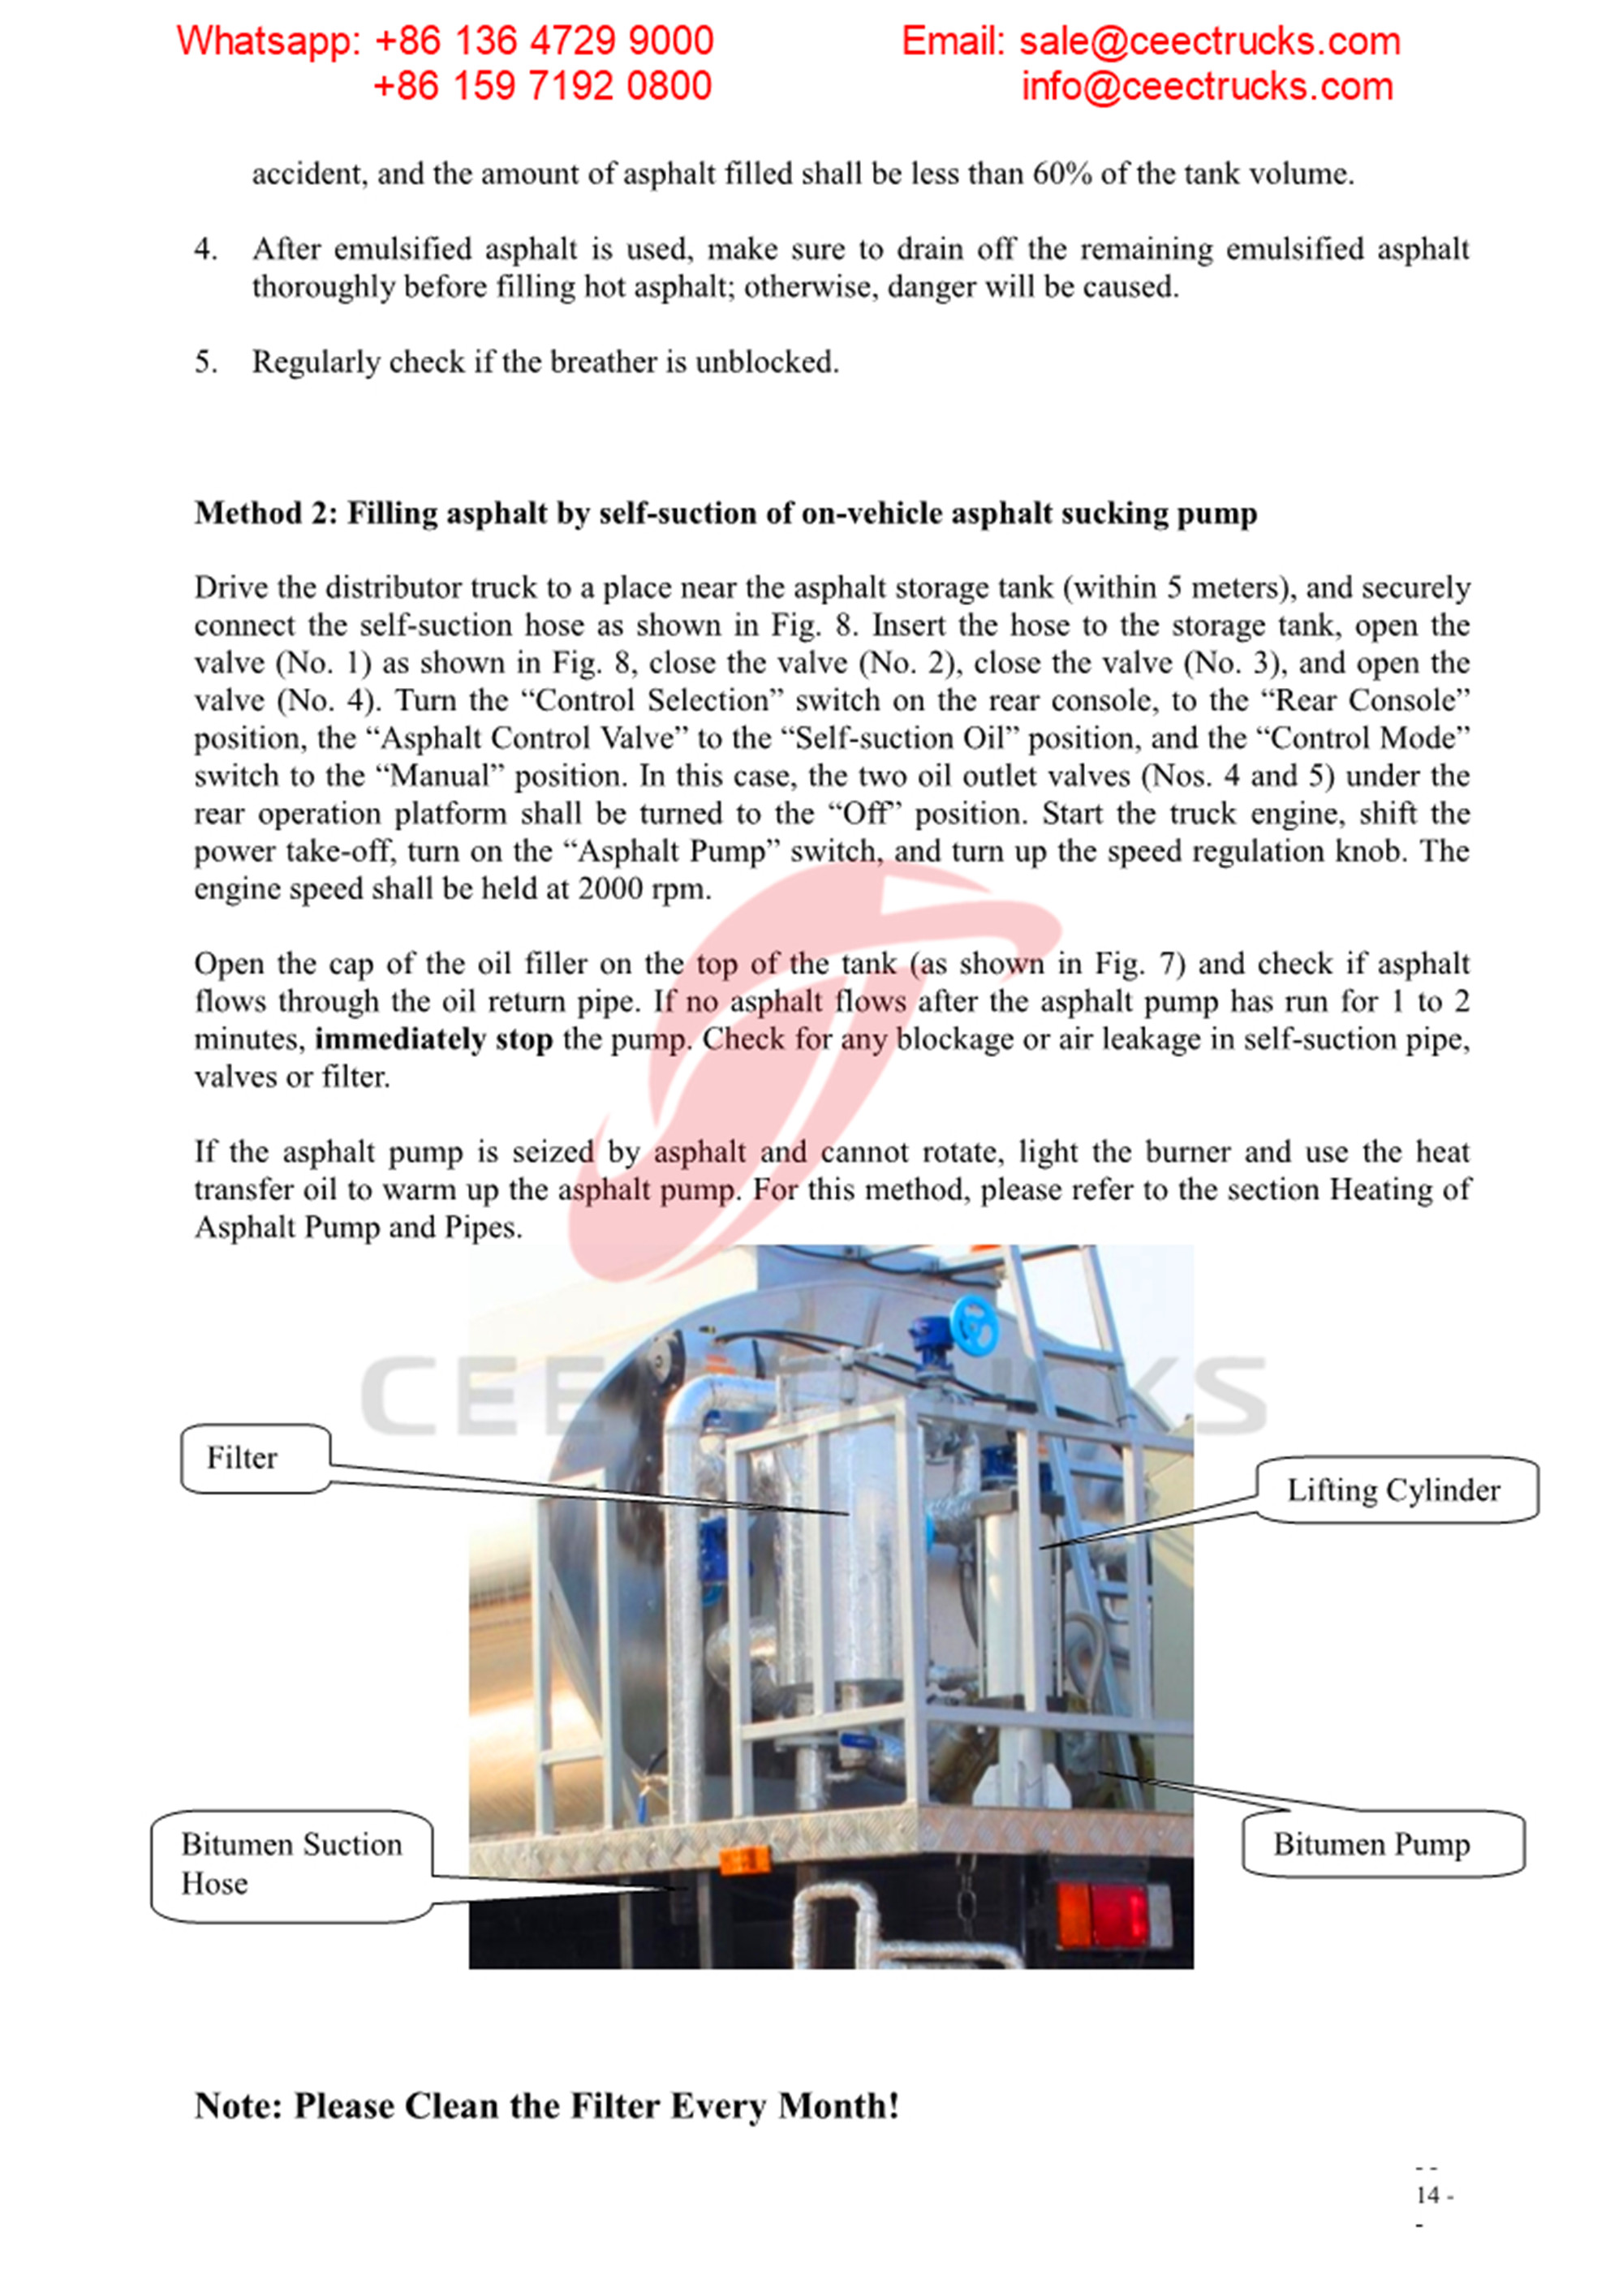 Myanmar customer buy asphalt distribution truck